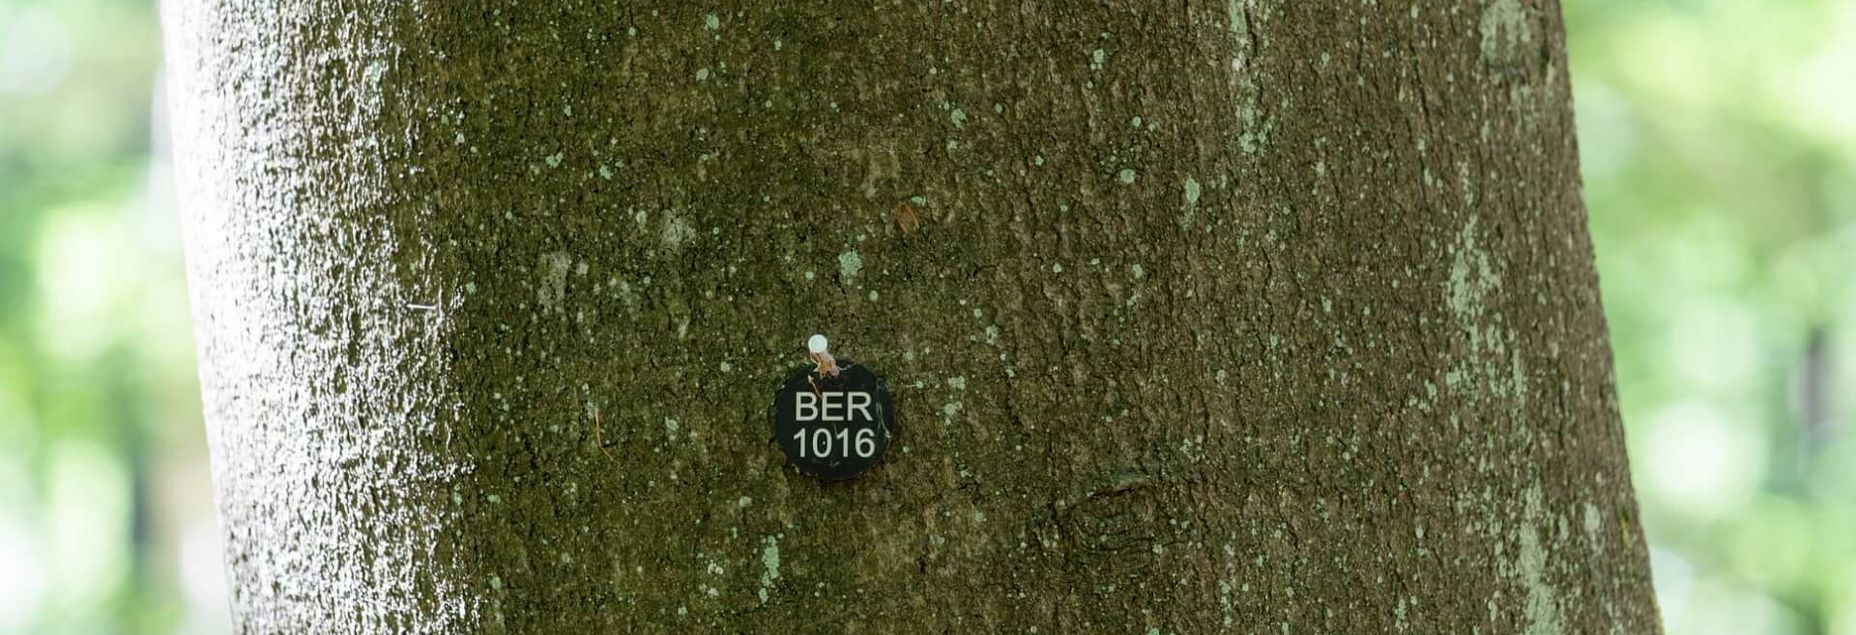 Baum BER 1016 - Plakette